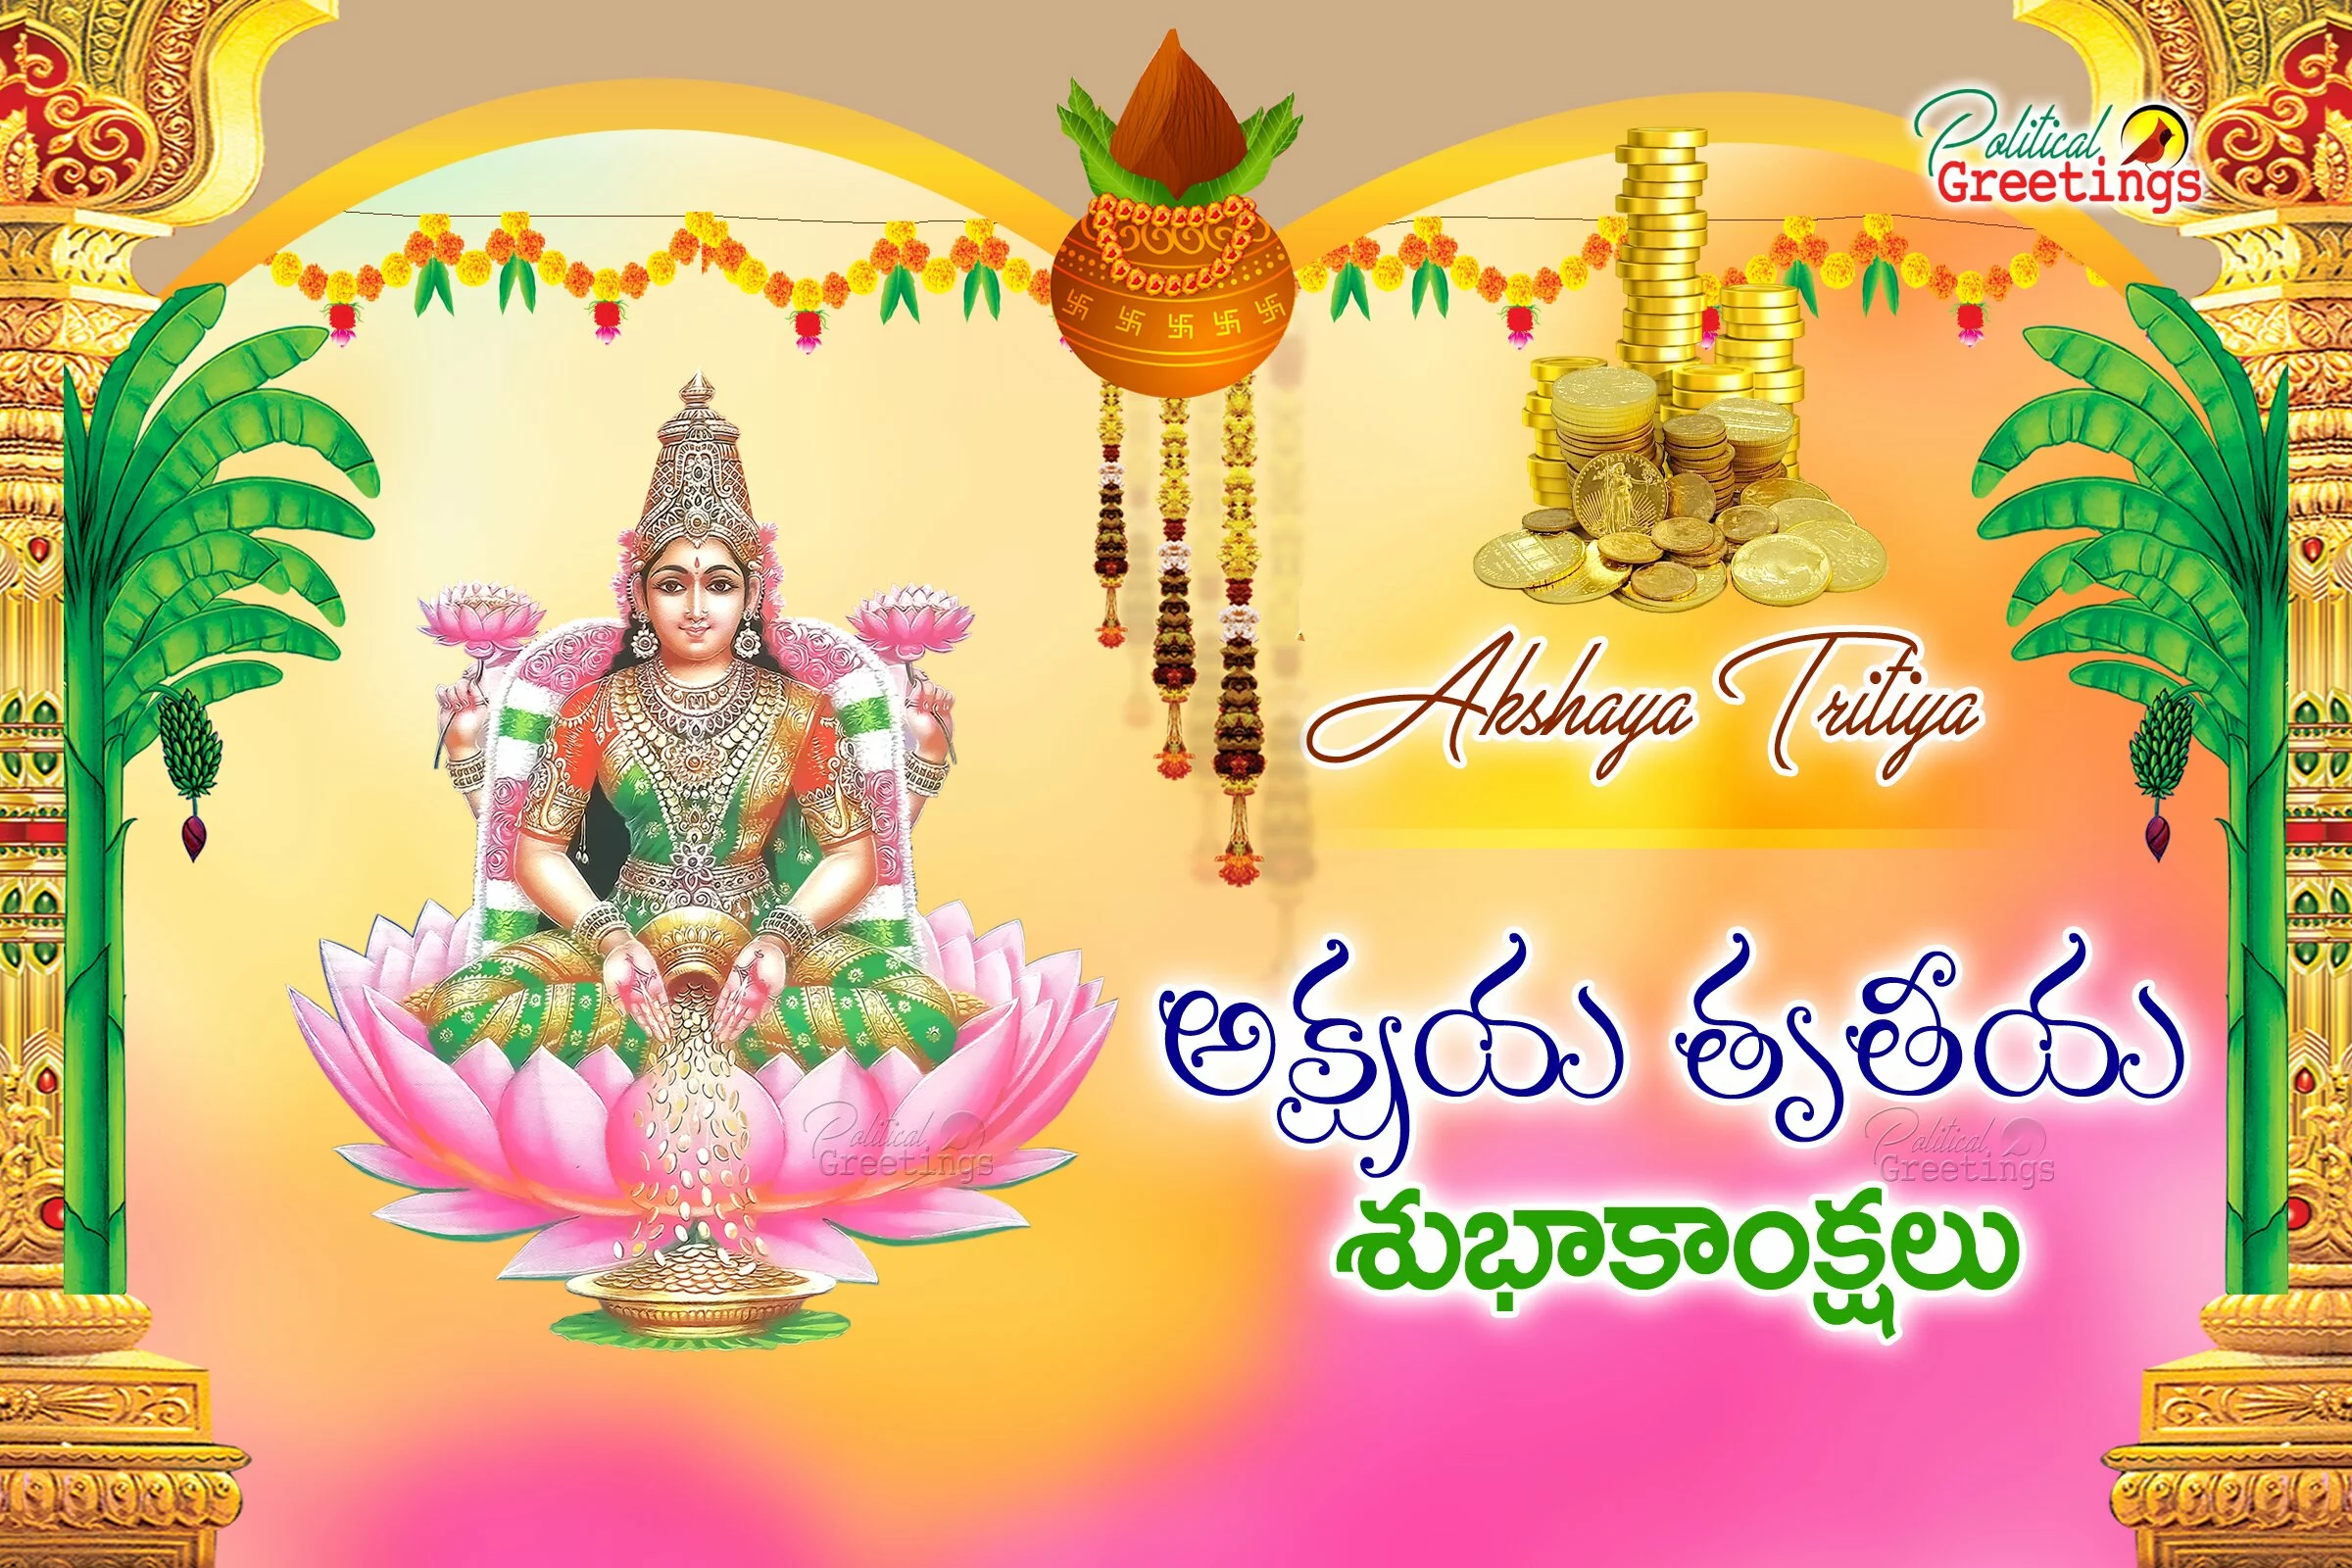 2017 Akshaya Truteeya Greetings with Goddess Lakshmi hd wallpapers in Telugu